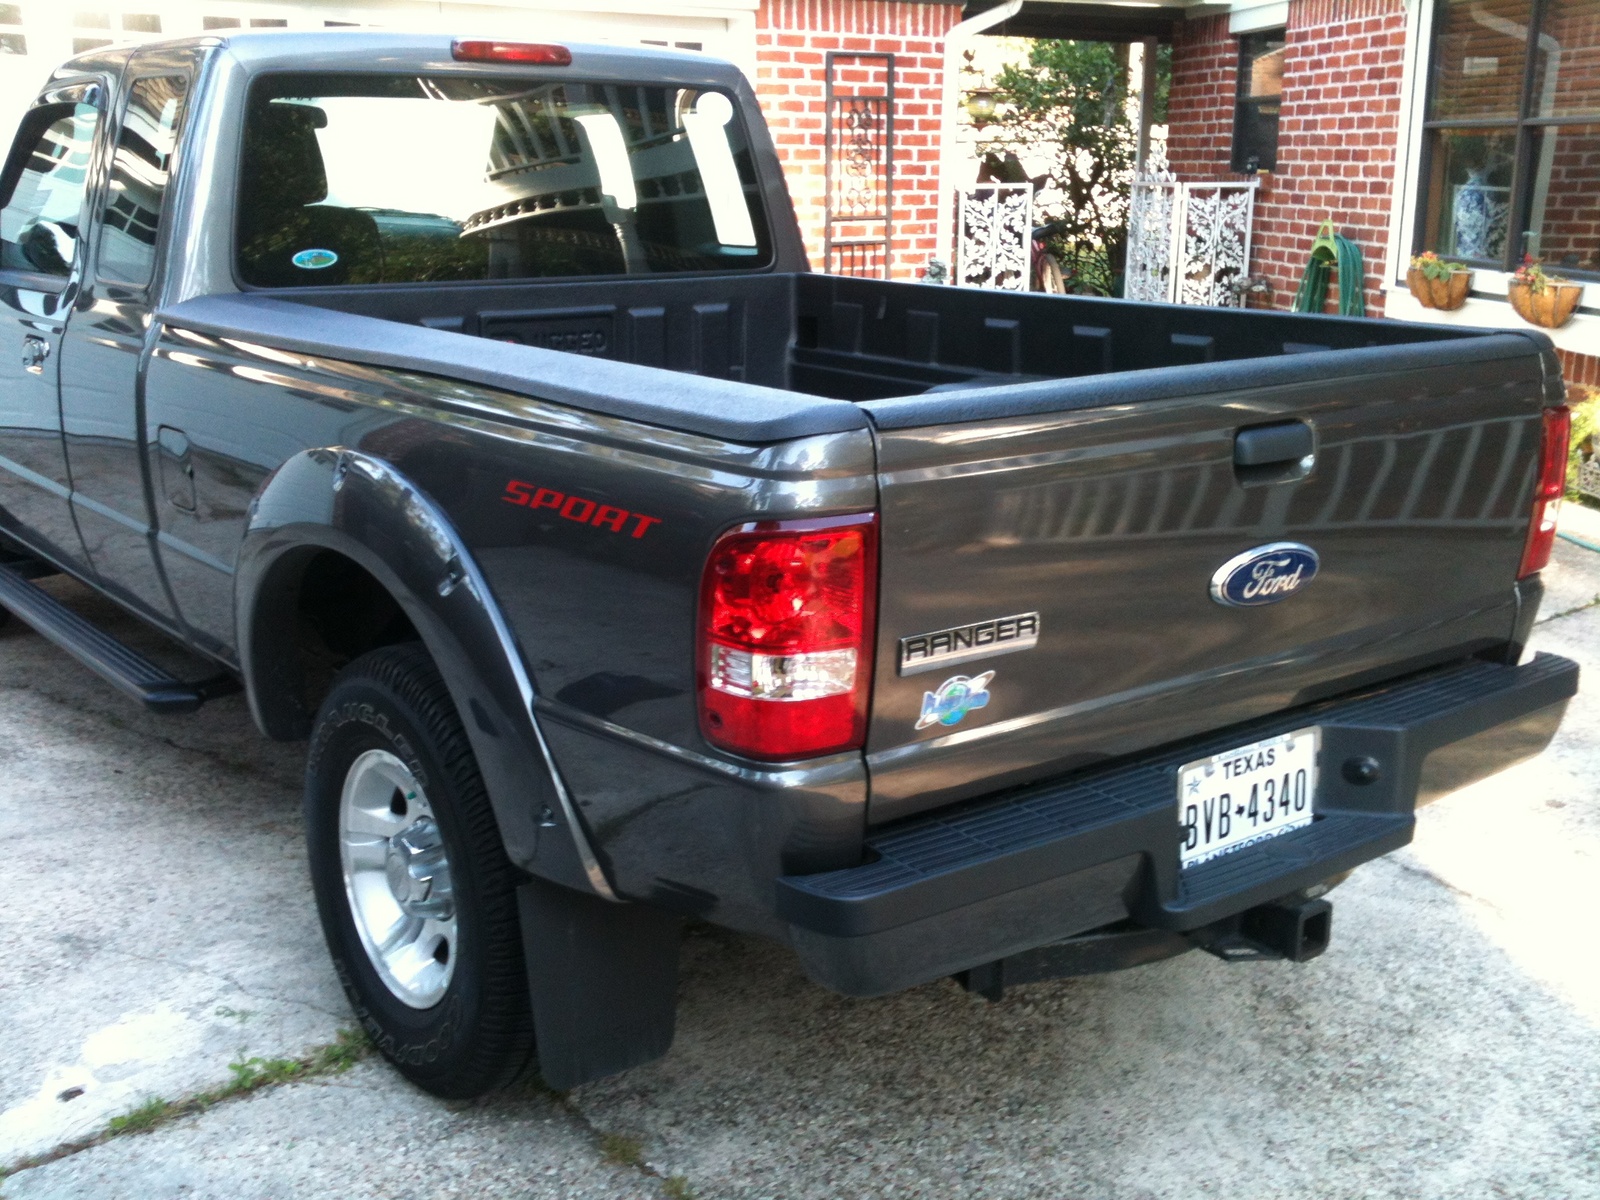 2011 Ford ranger baby seat #7